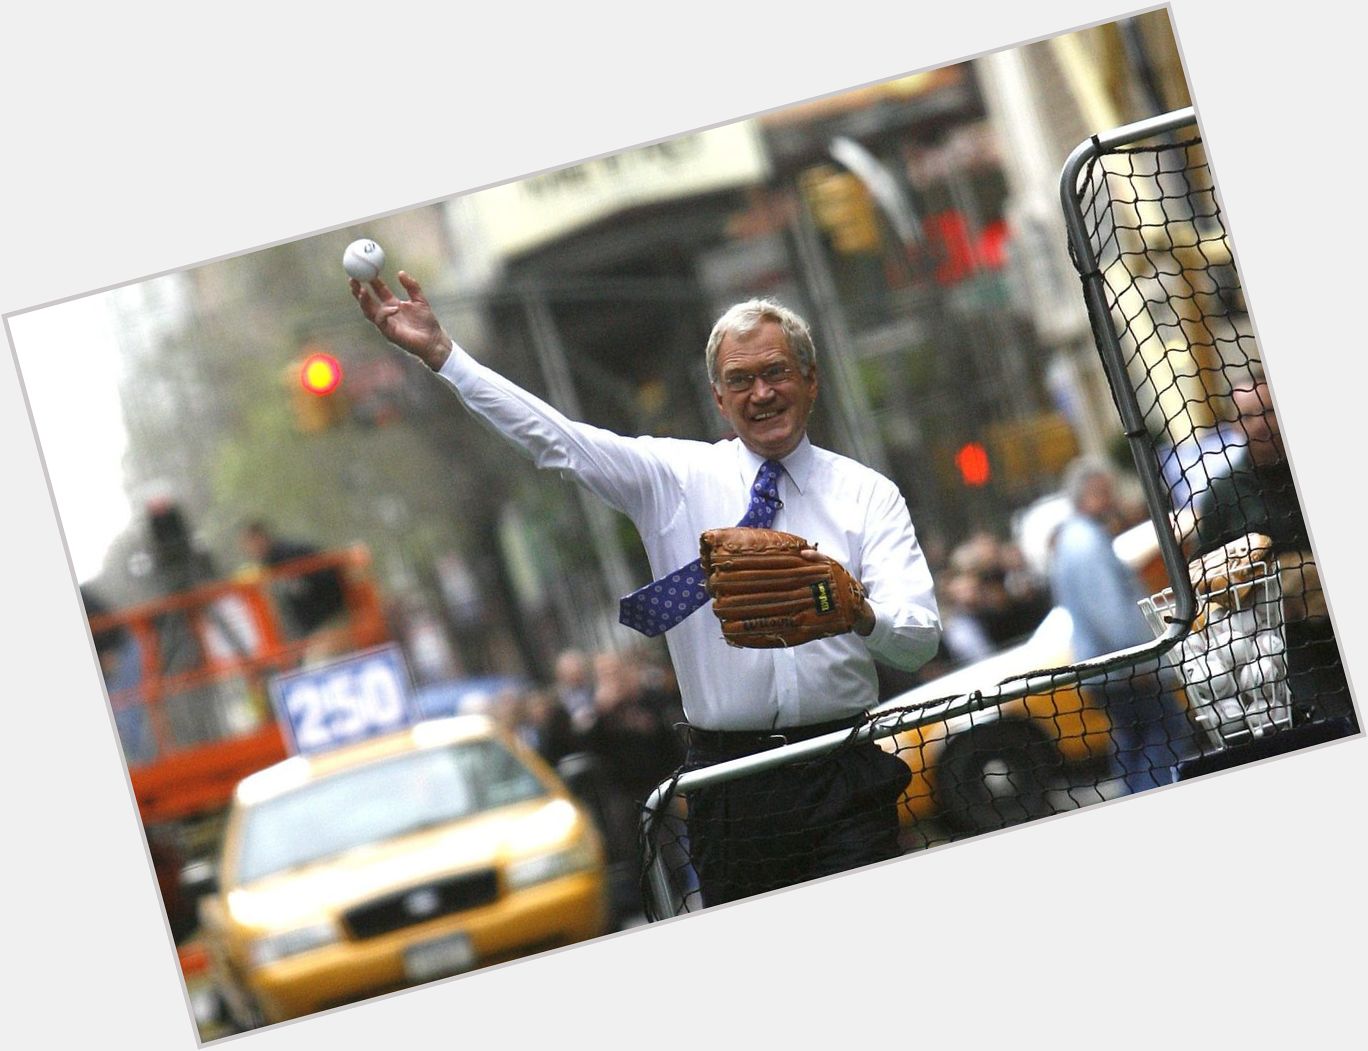 Happy birthday to David Letterman! 